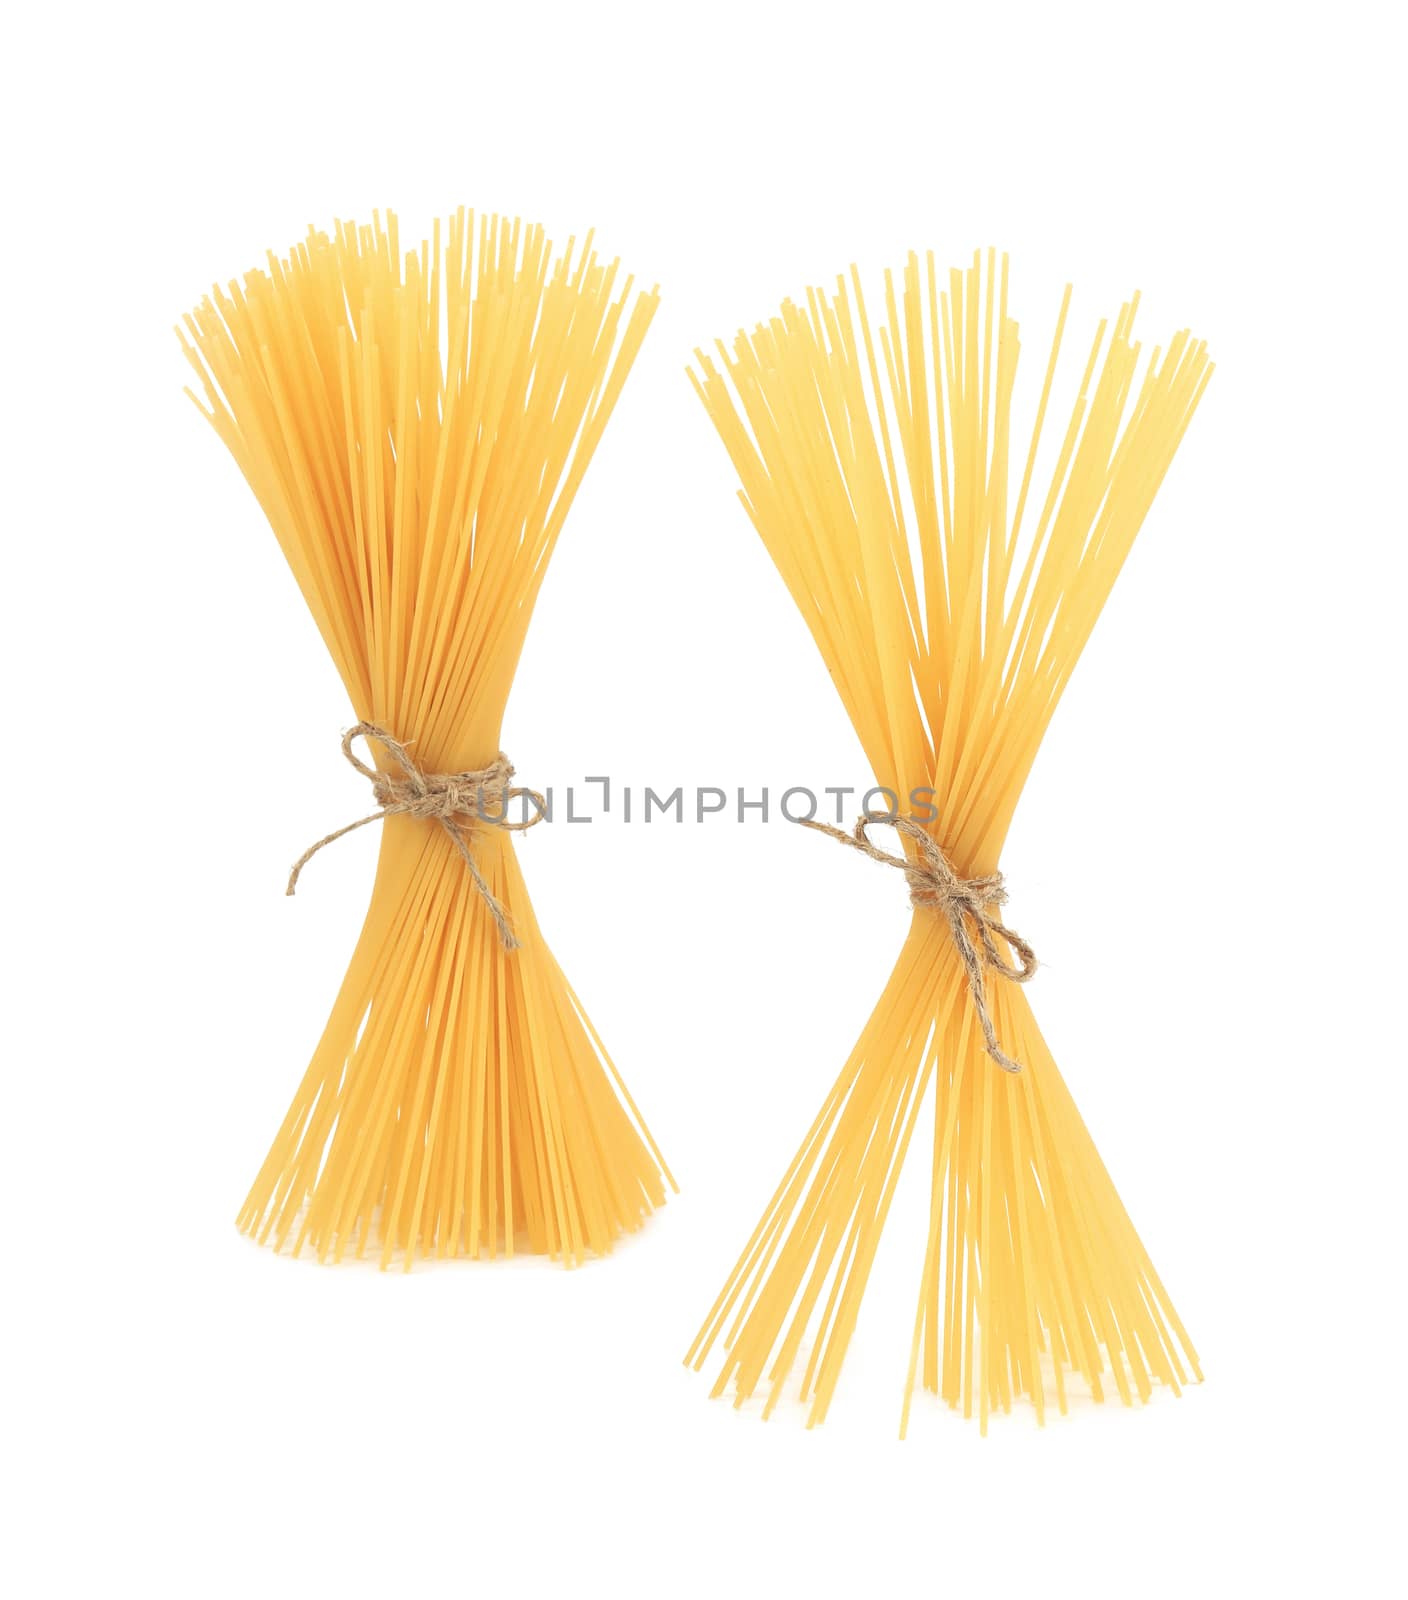 Raw spaghetti pasta. Isolated on a white background.